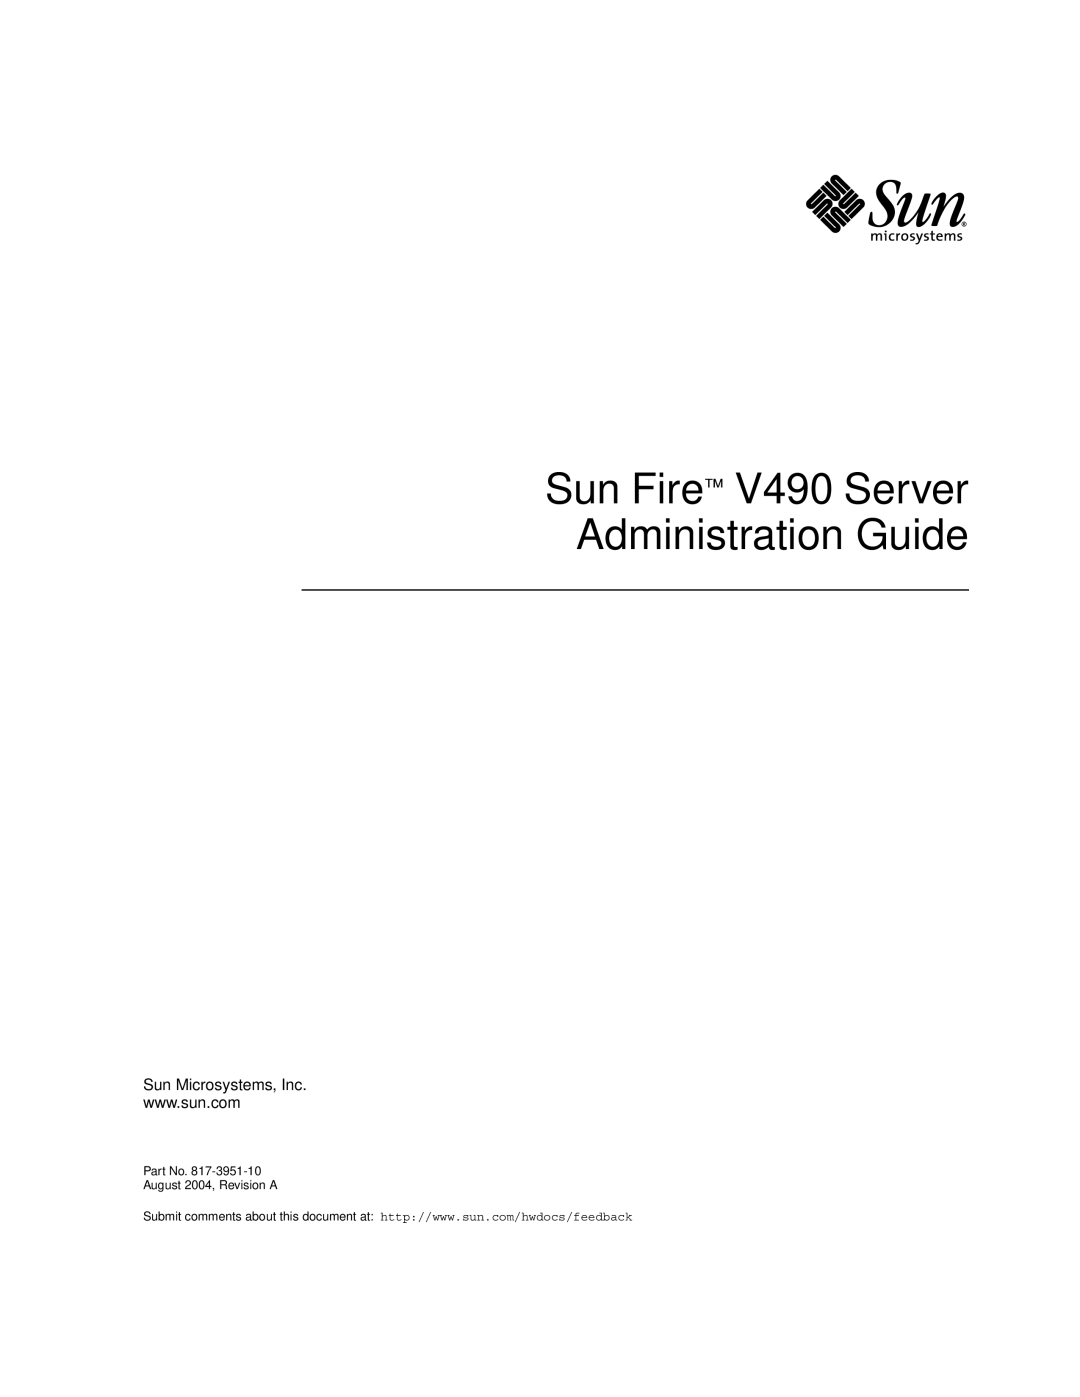 Sun Microsystems manual Sun Fire V490 Server Administration Guide 